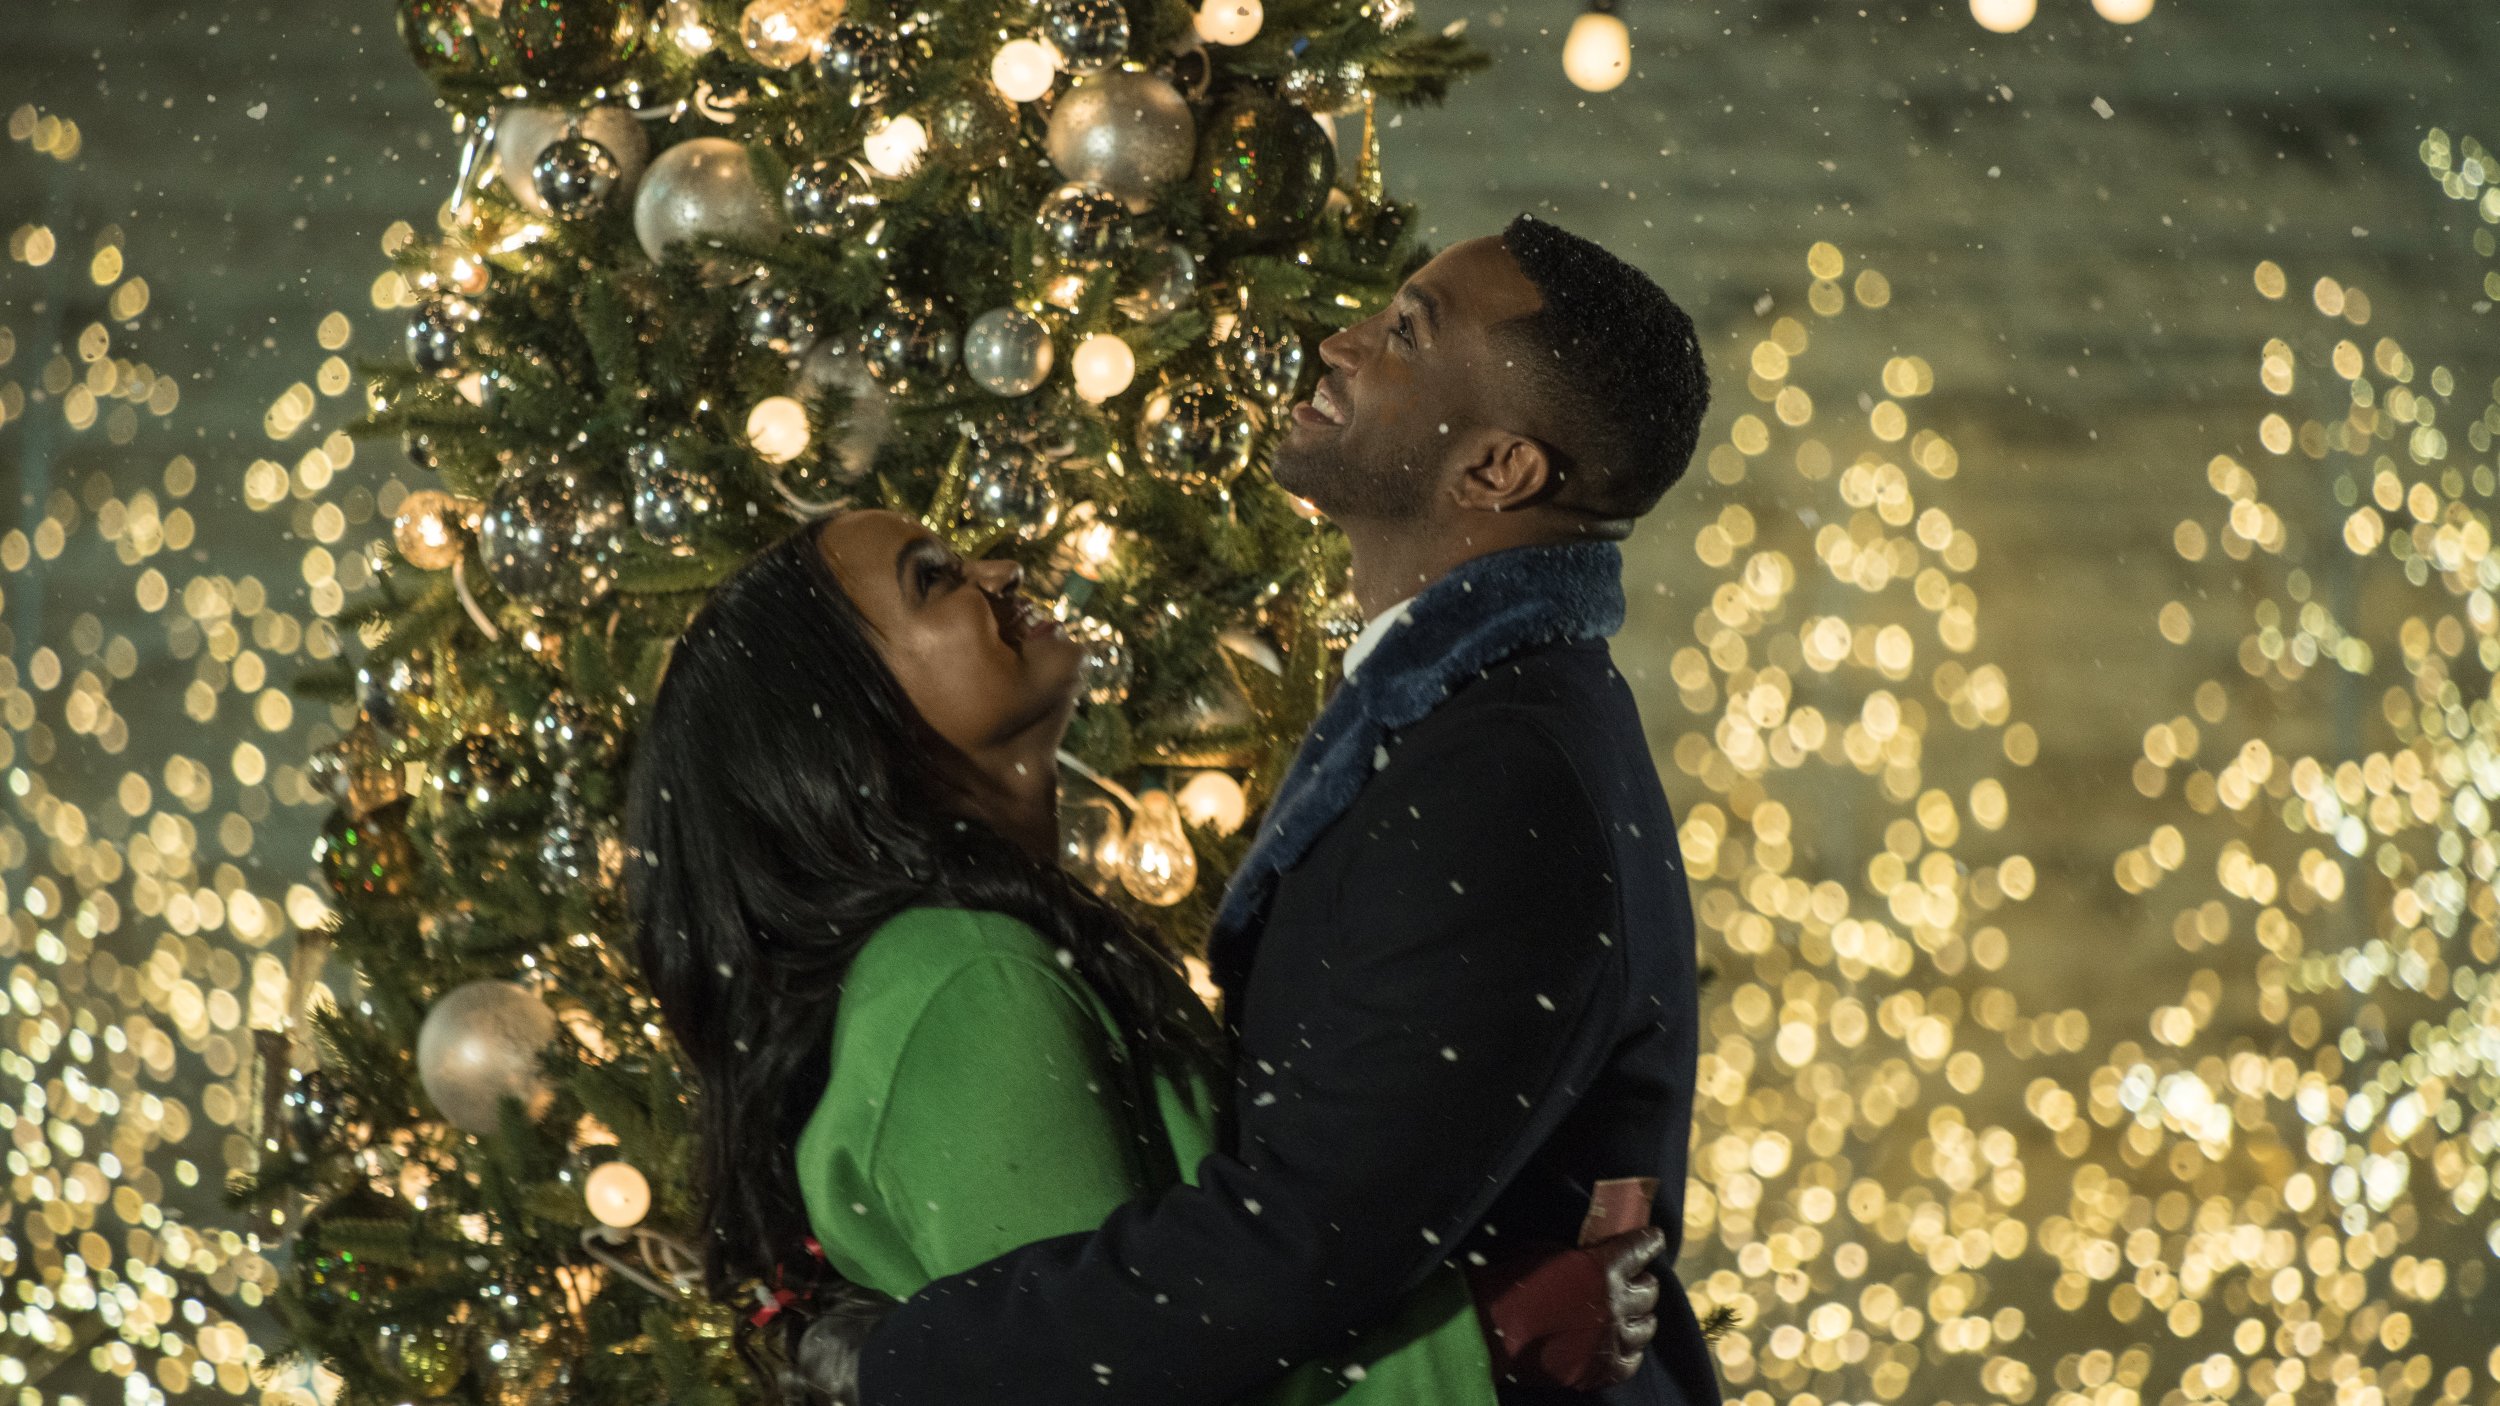 ‘Let’s Meet Again On Christmas Eve’ Lifetime Movie Premiere Trailer